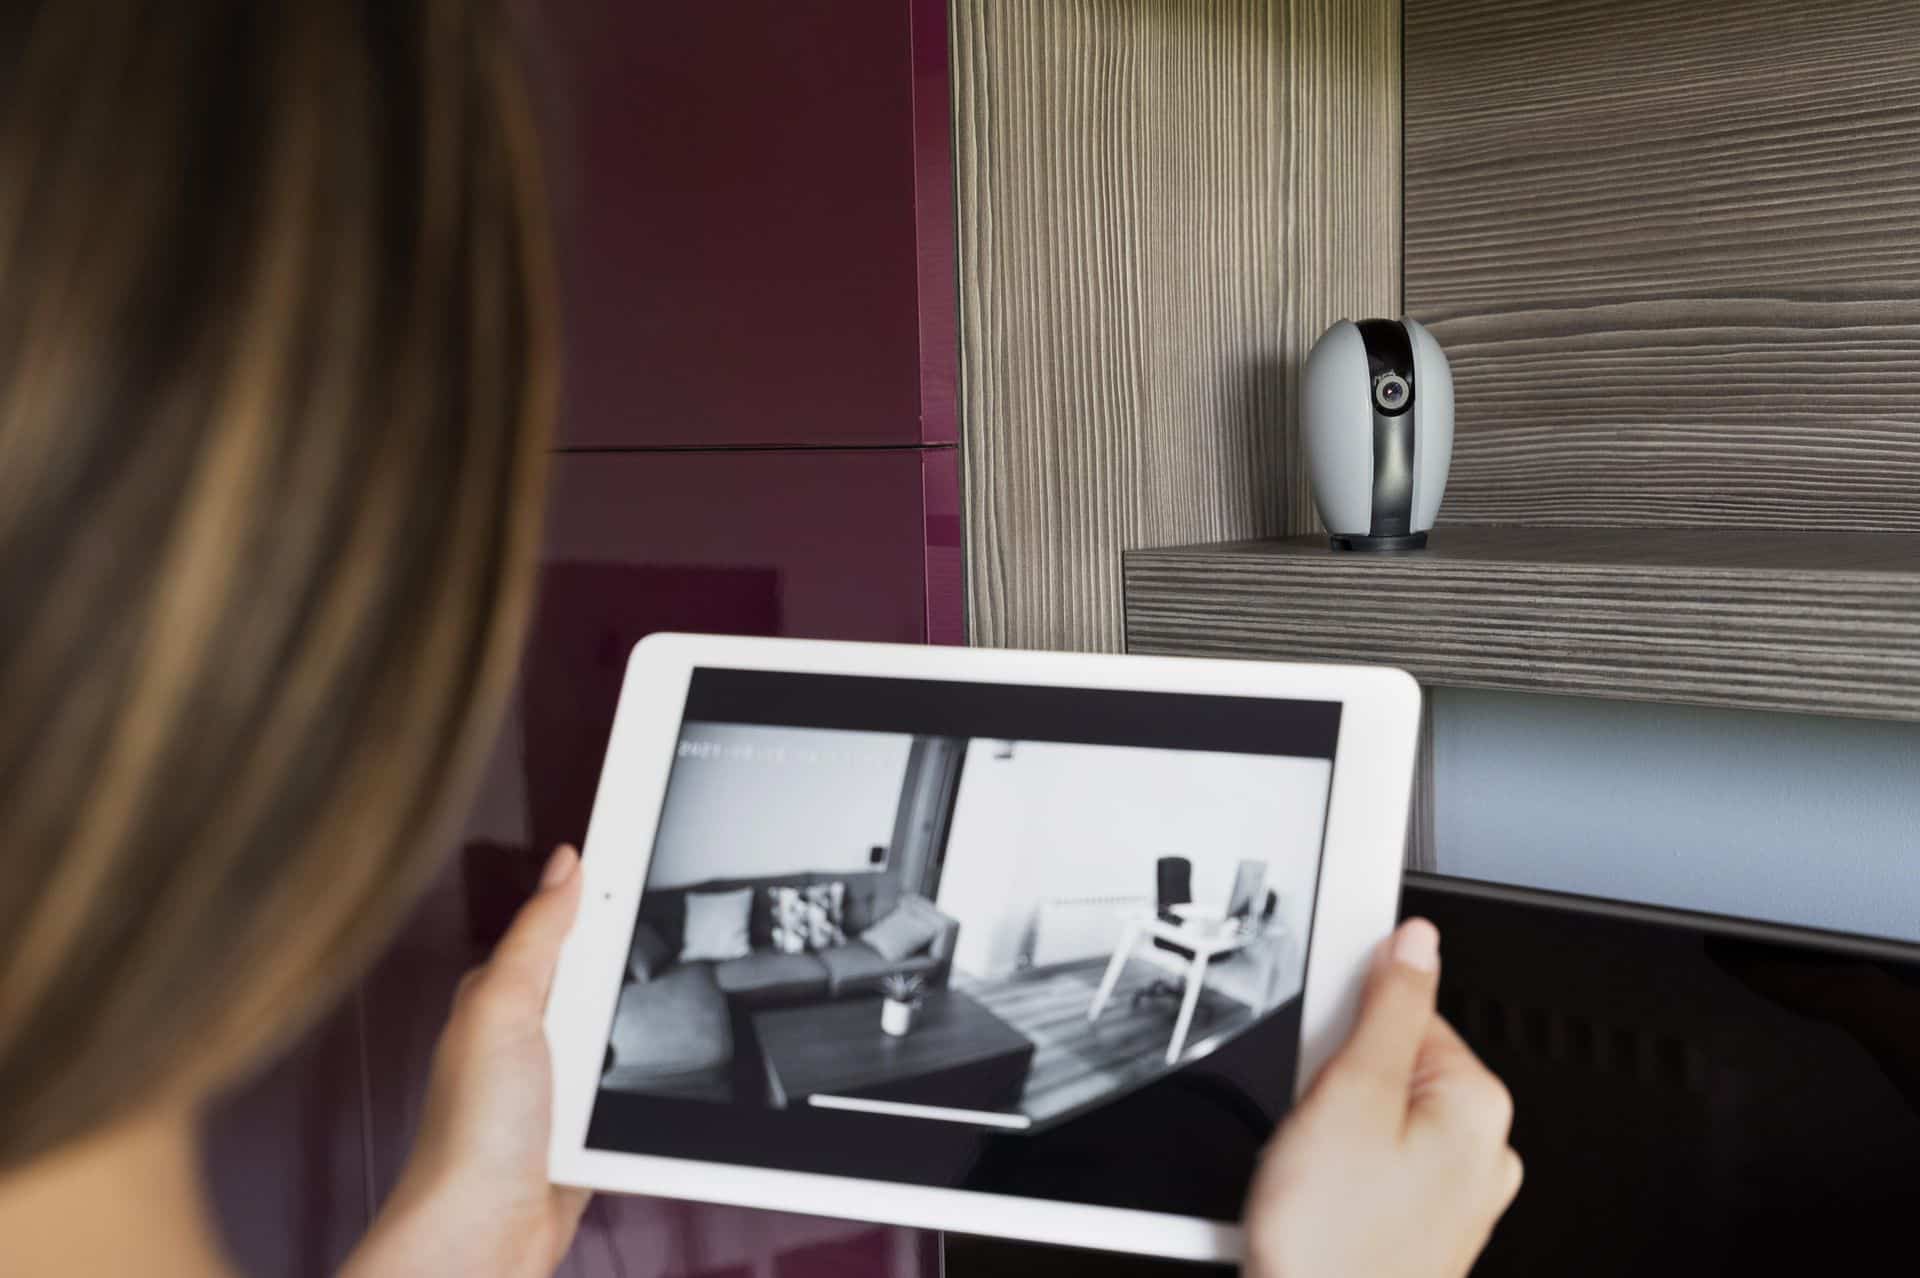 Home CCTV with monitor on iPad